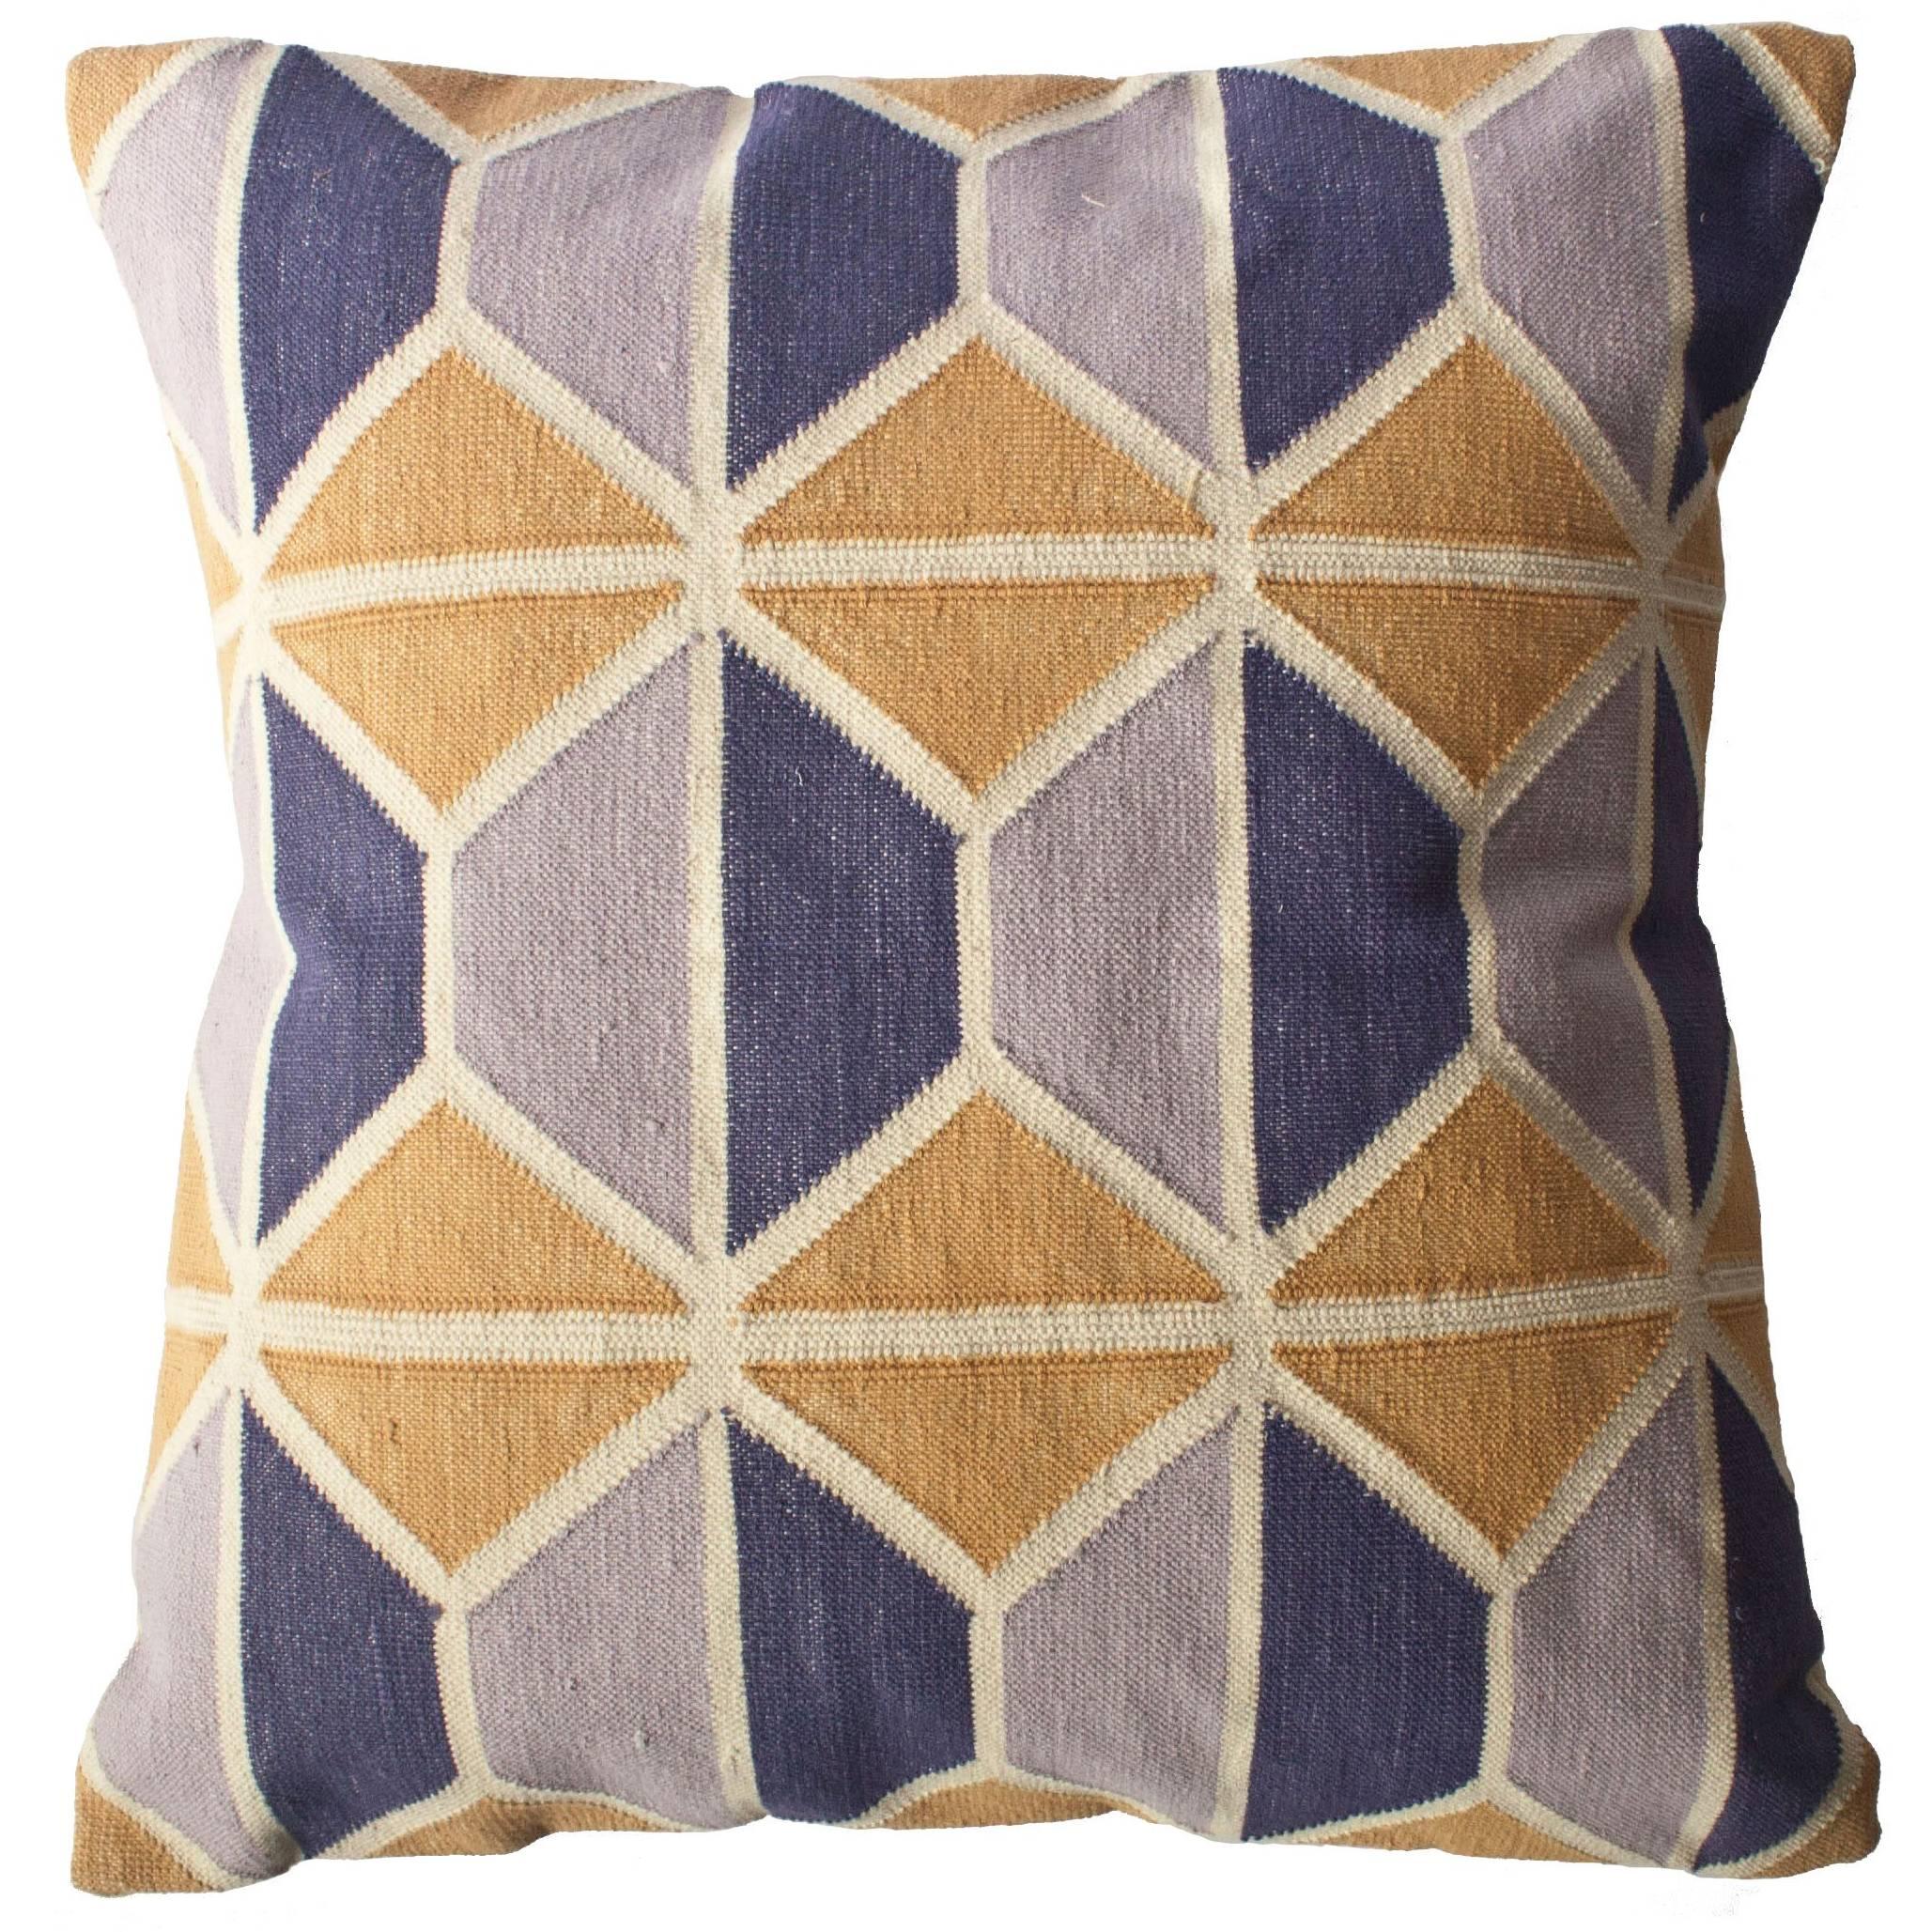 Geometric Mave Hand Woven Modern Hexagon Throw Pillow Cover